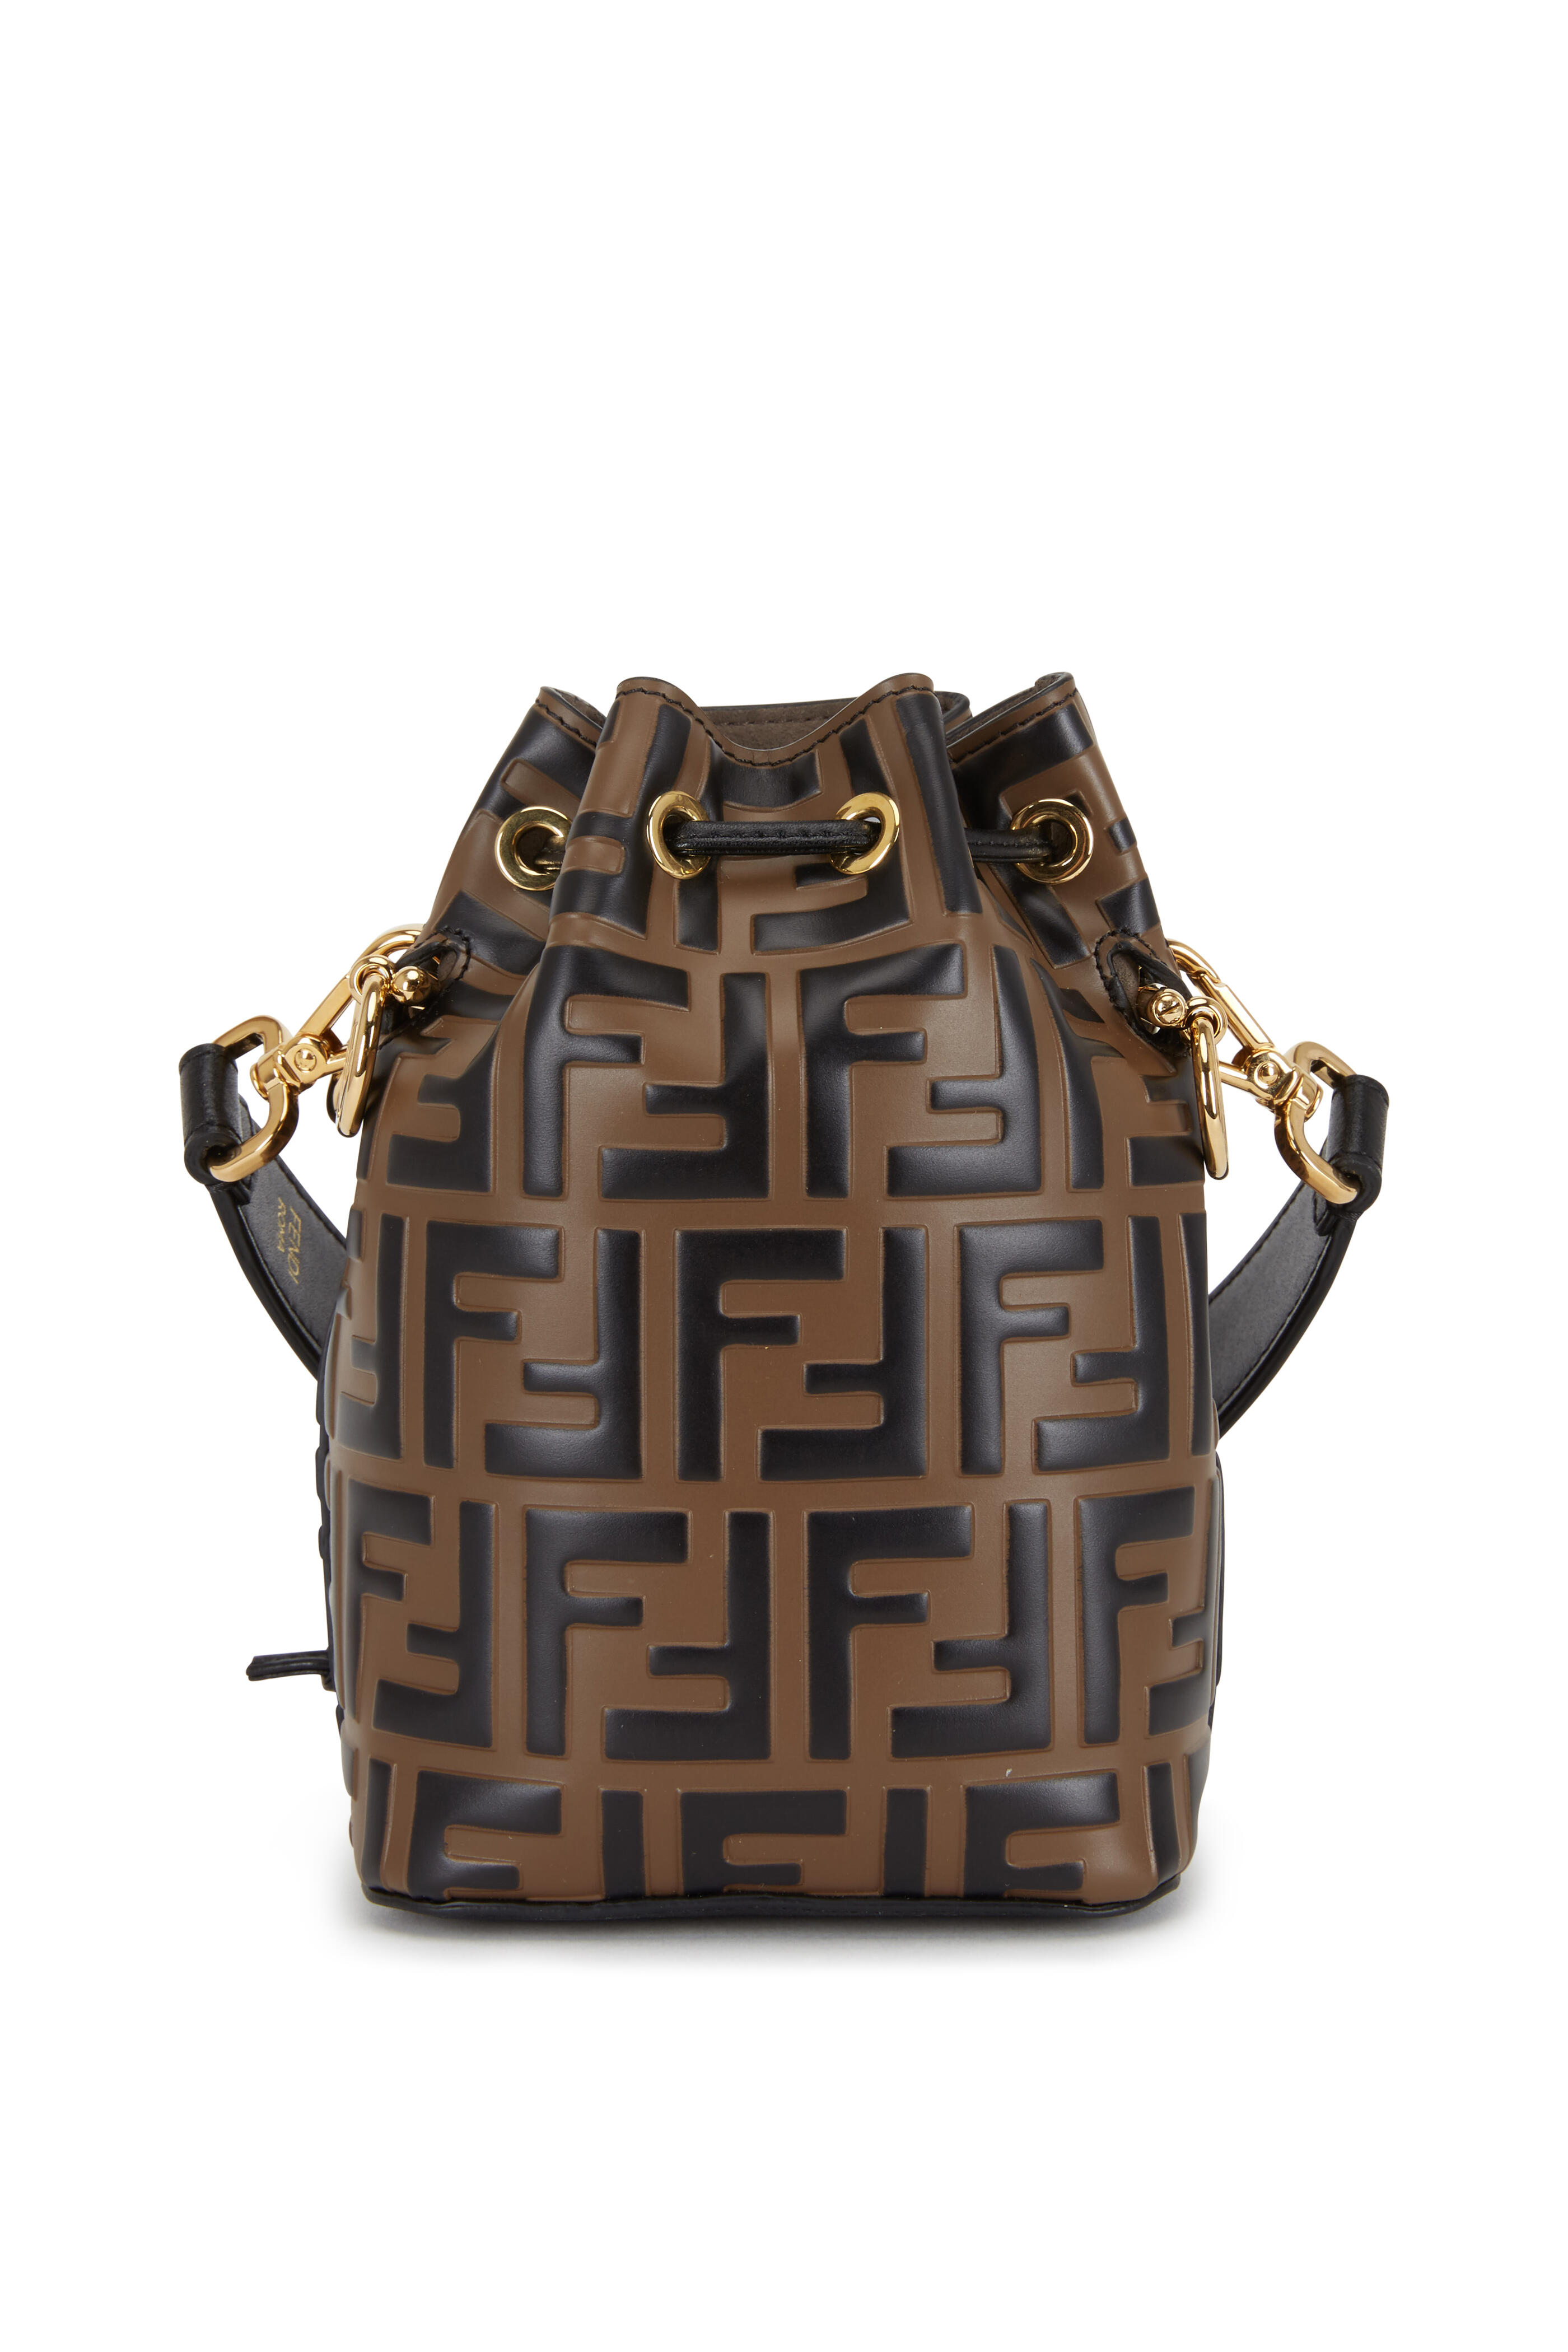 Fendi Taupe Leather Mini Mon Tresor Drawstring Bucket Bag Fendi